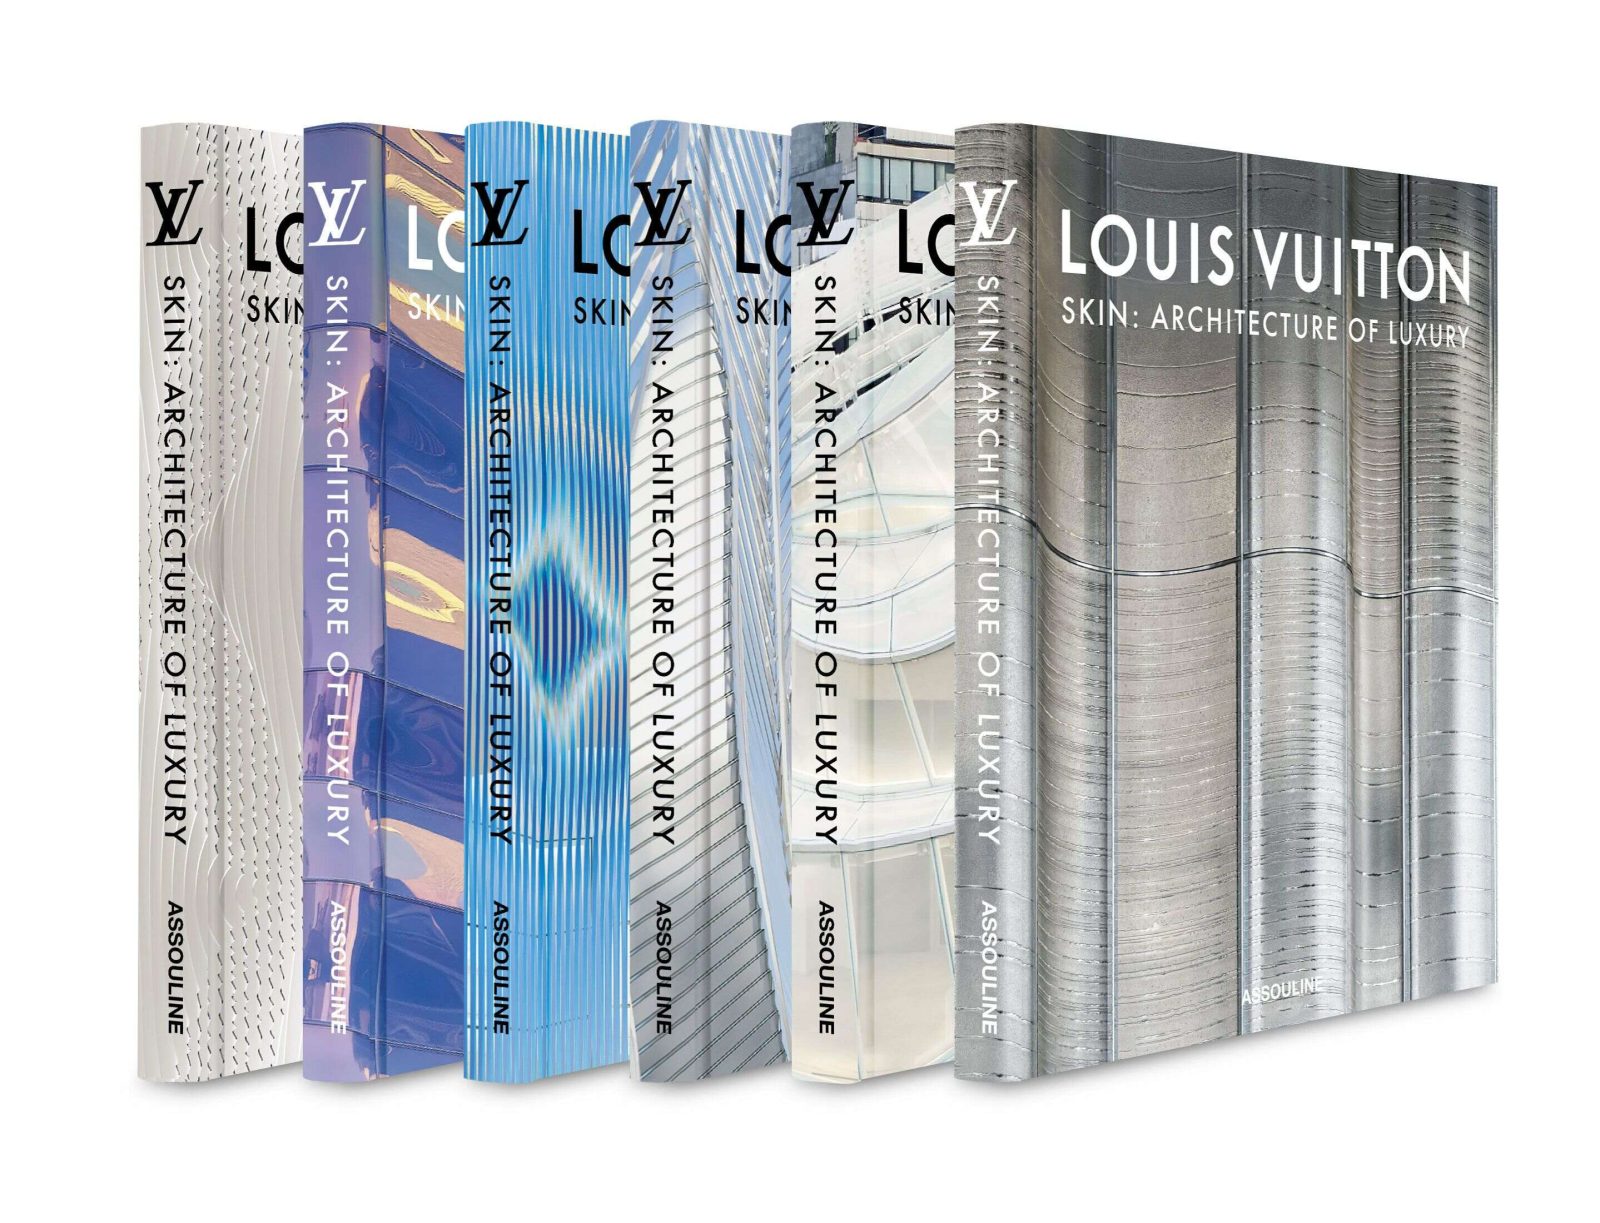 Assouline launcht neue Buch-Reihe Louis Vuitton Skin